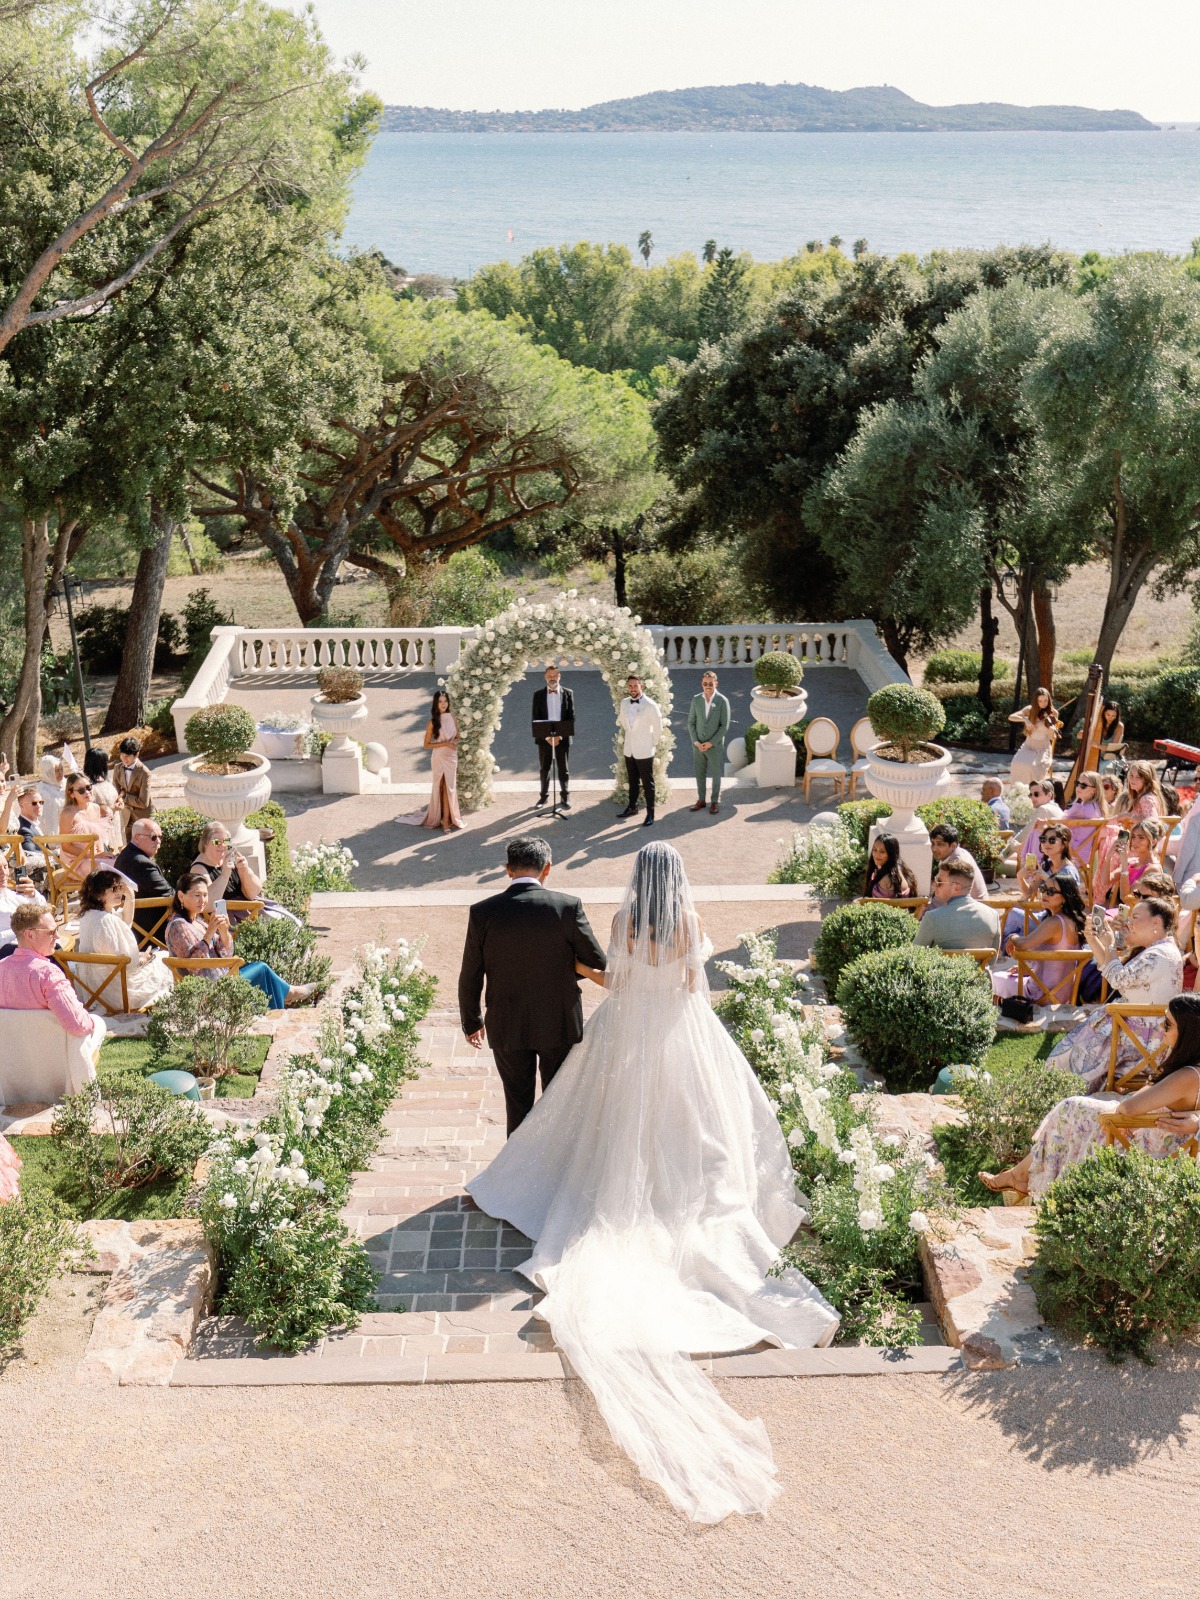 French Mediterranean outdoor wedding ceremony